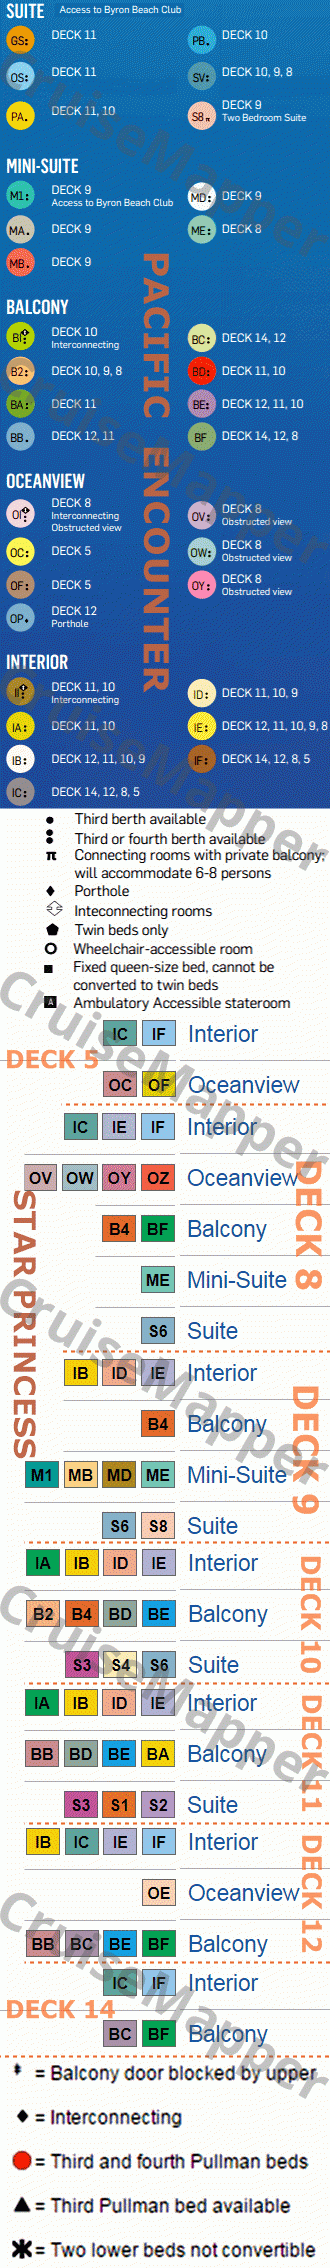 Pacific Encounter deck 12 plan (Terrace Pool-Cabins) legend